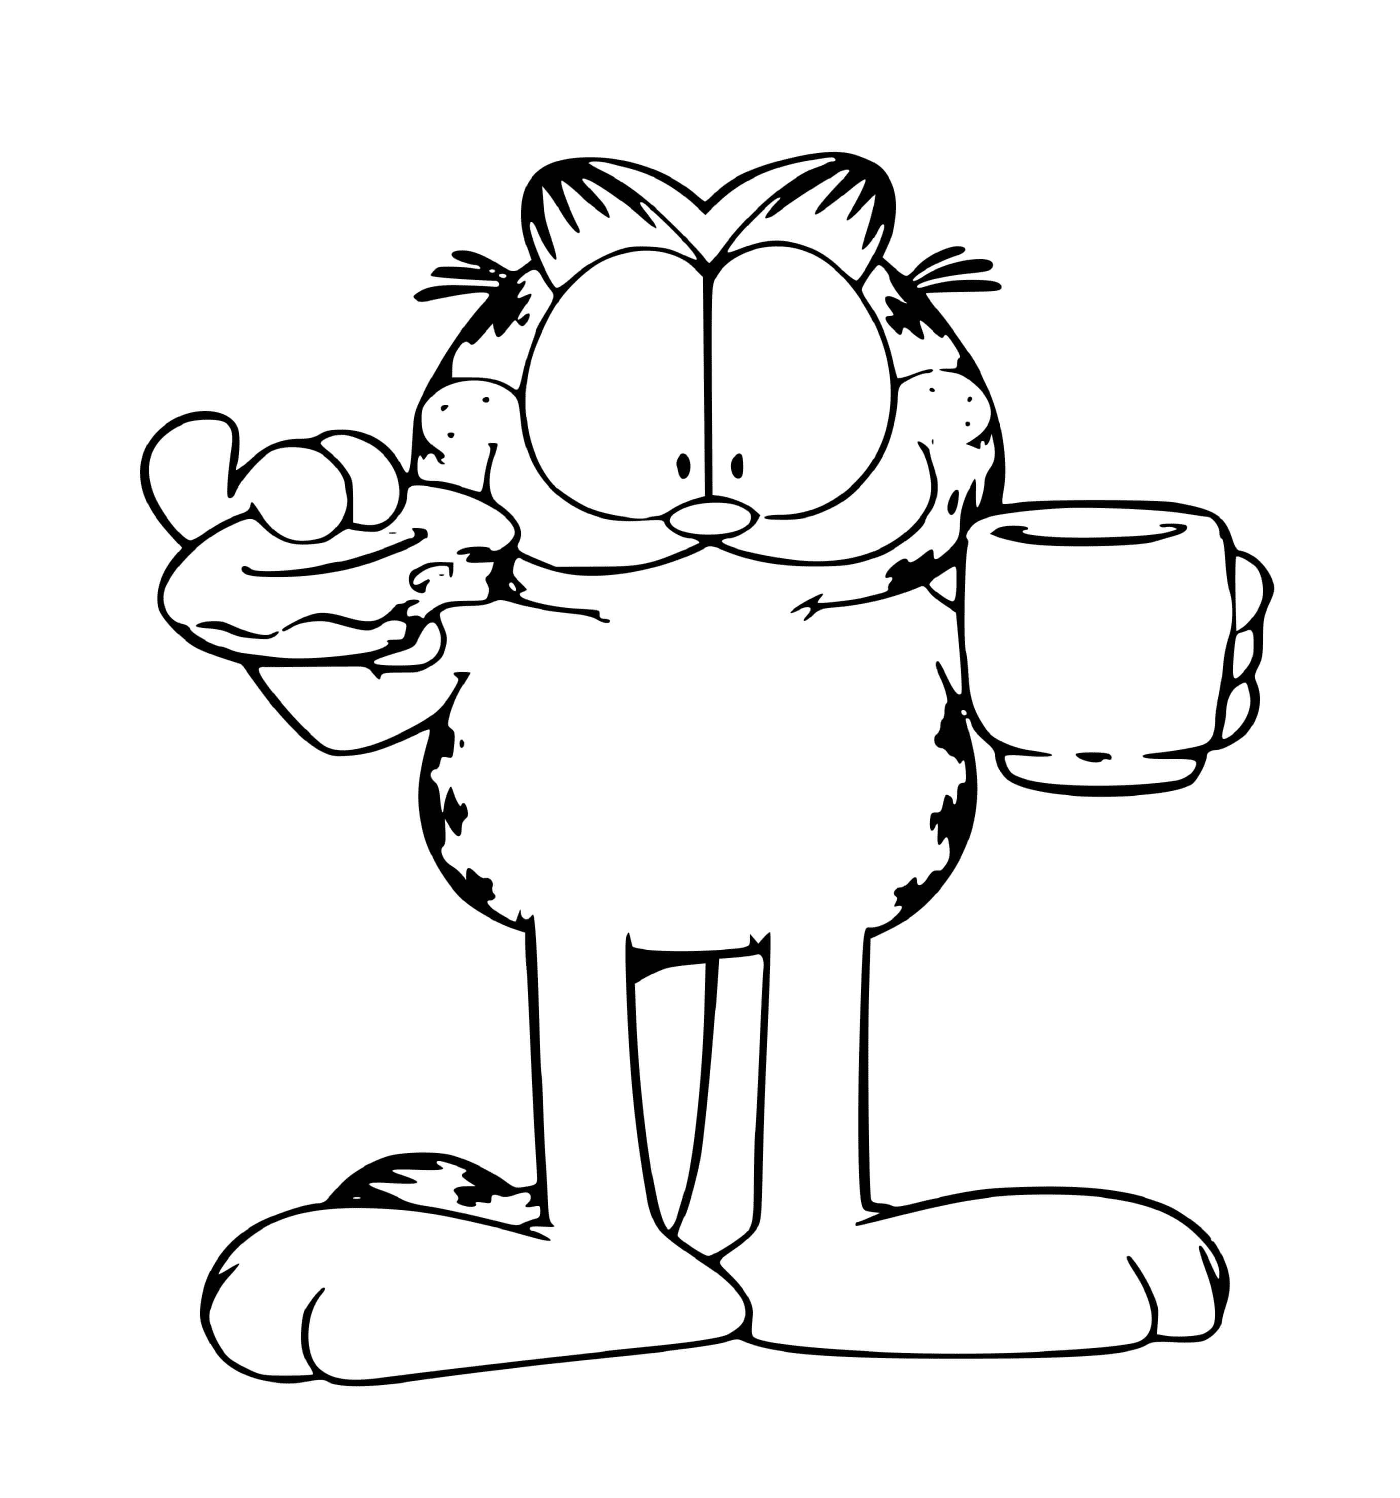  Garfield drinks coffee and eats a doughnut 